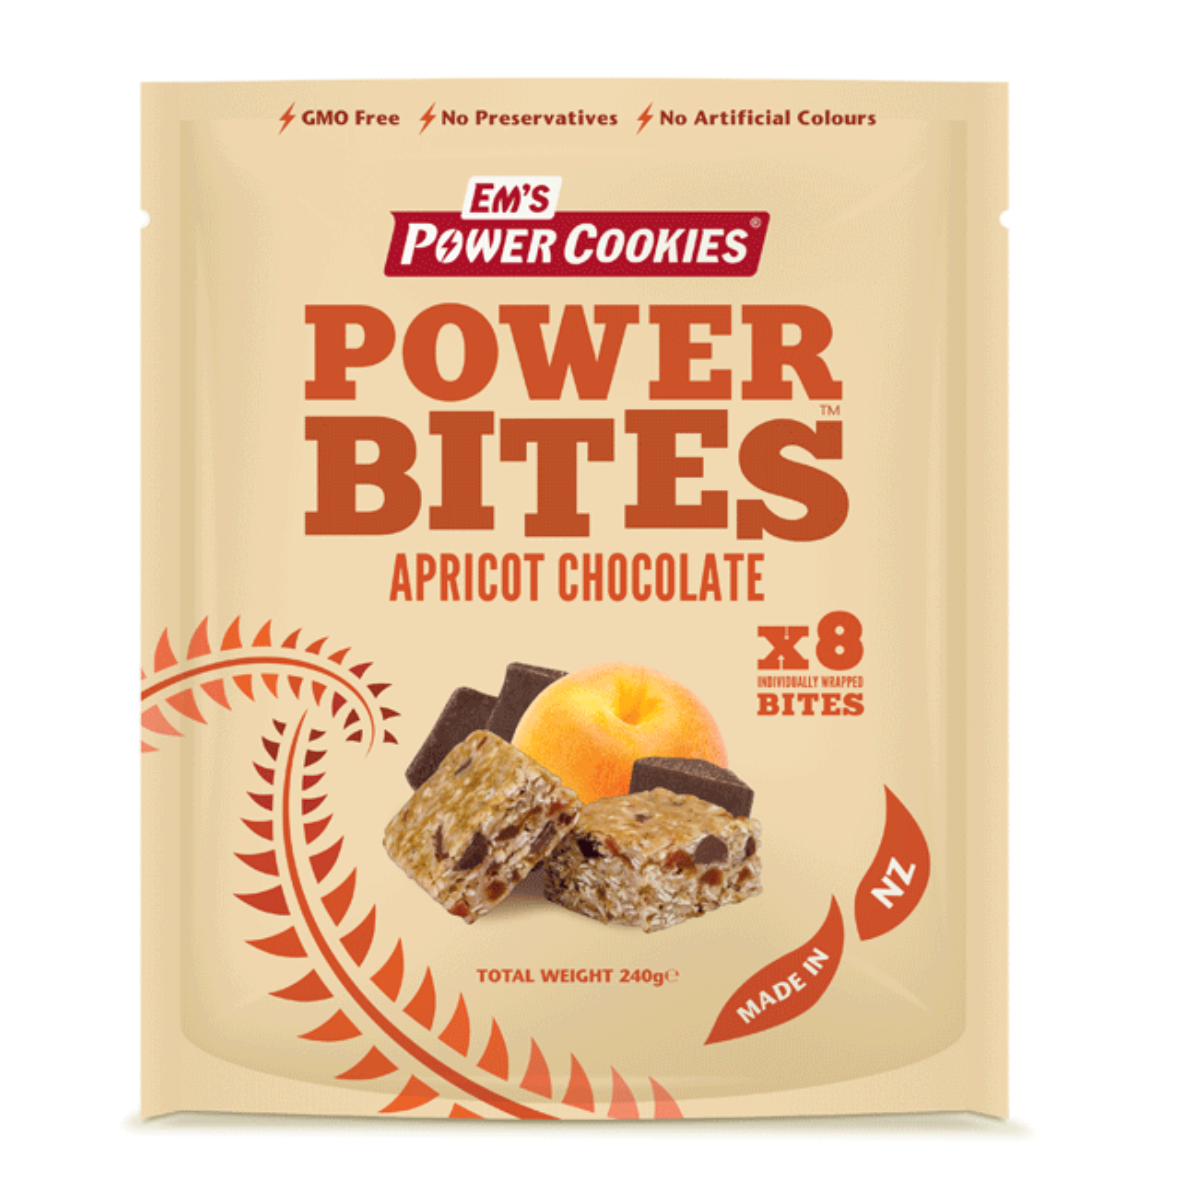 Em's Power Cookies Apricot Chocolate Power Bites